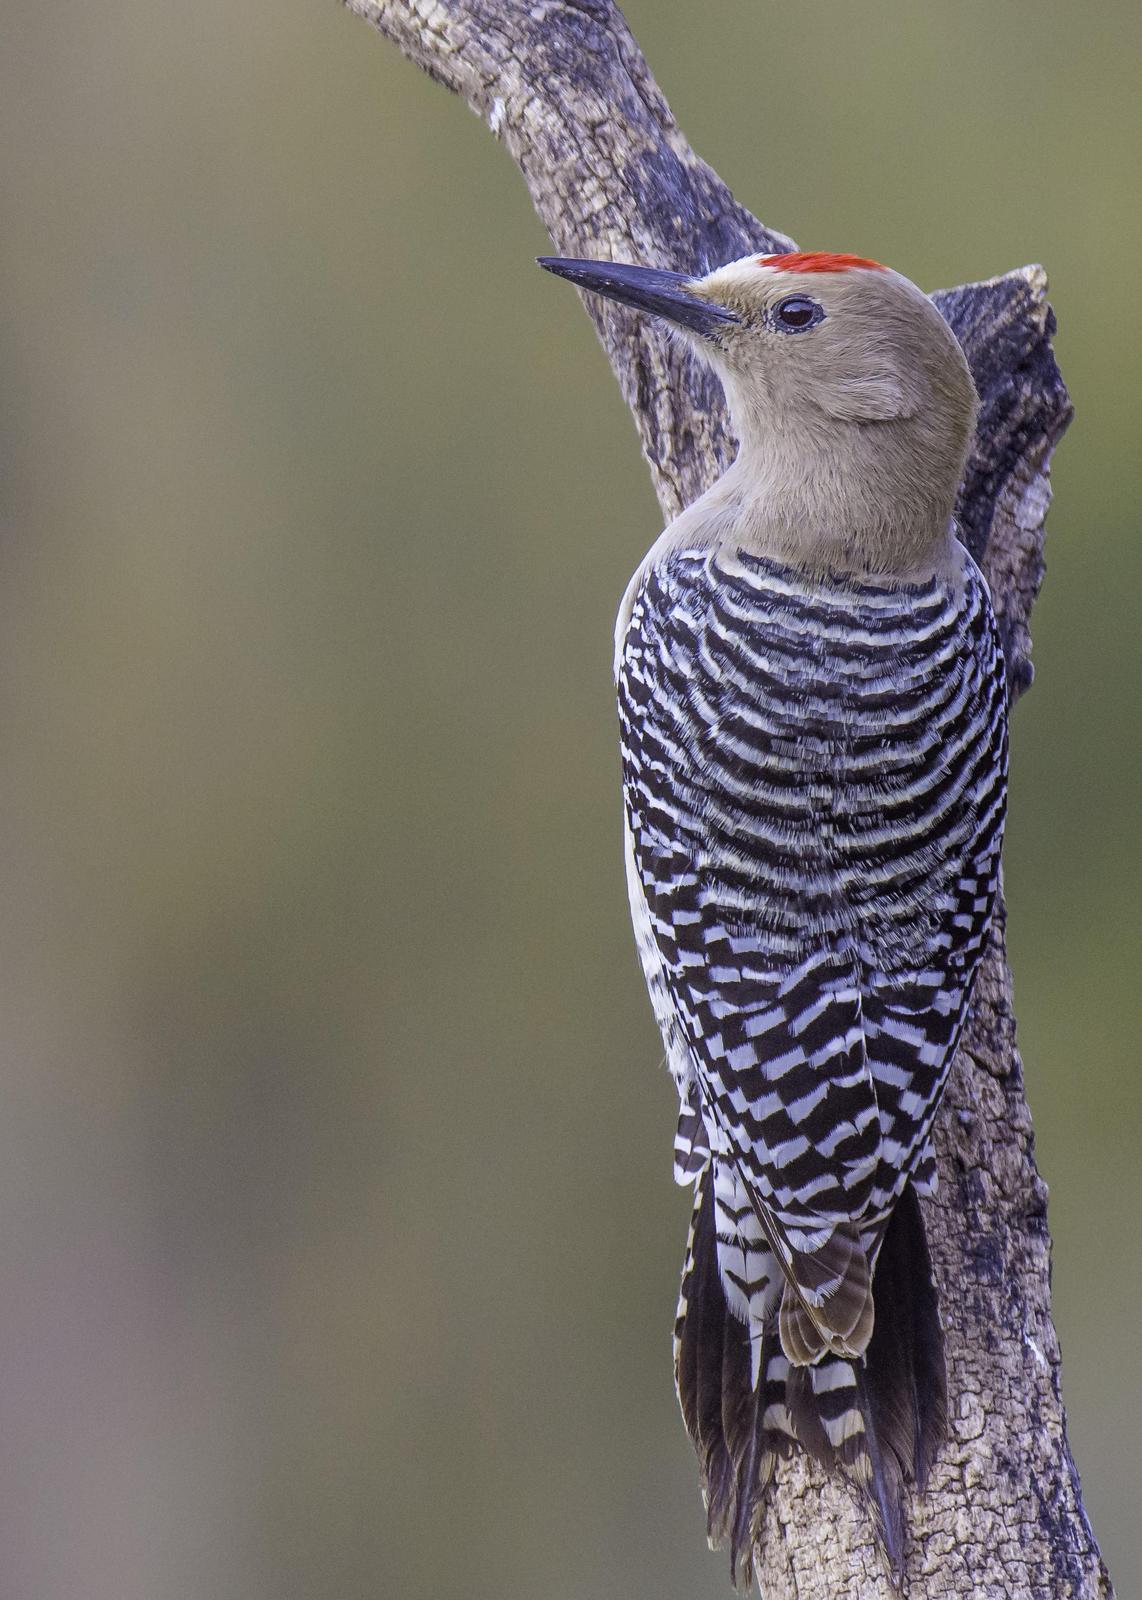 Gila Woodpecker Photo by Mason Rose